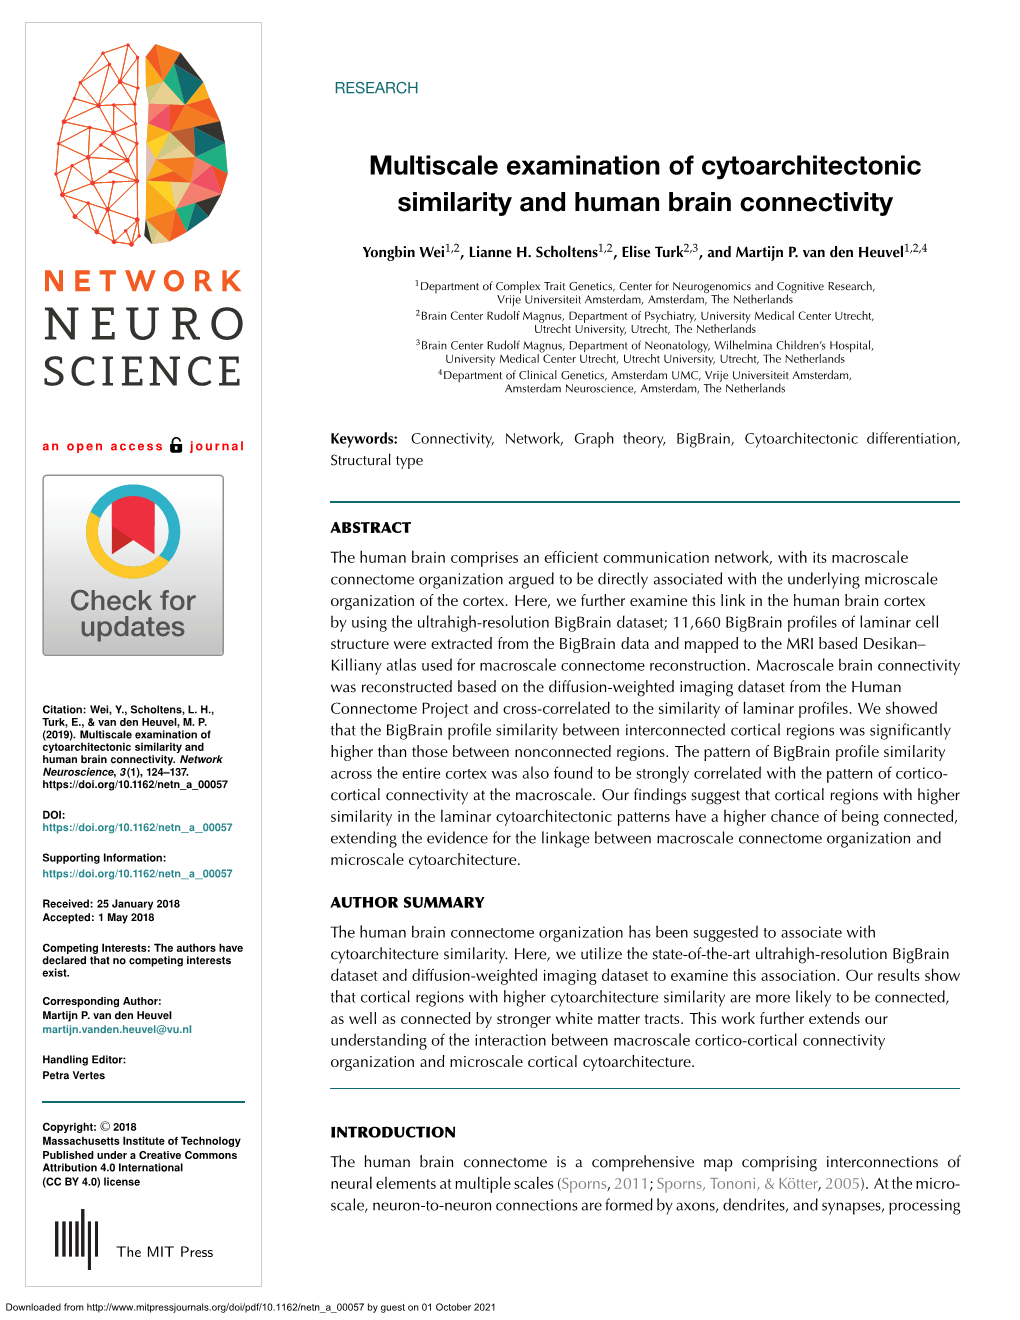 Multiscale Examination of Cytoarchitectonic Similarity and Human Brain Connectivity